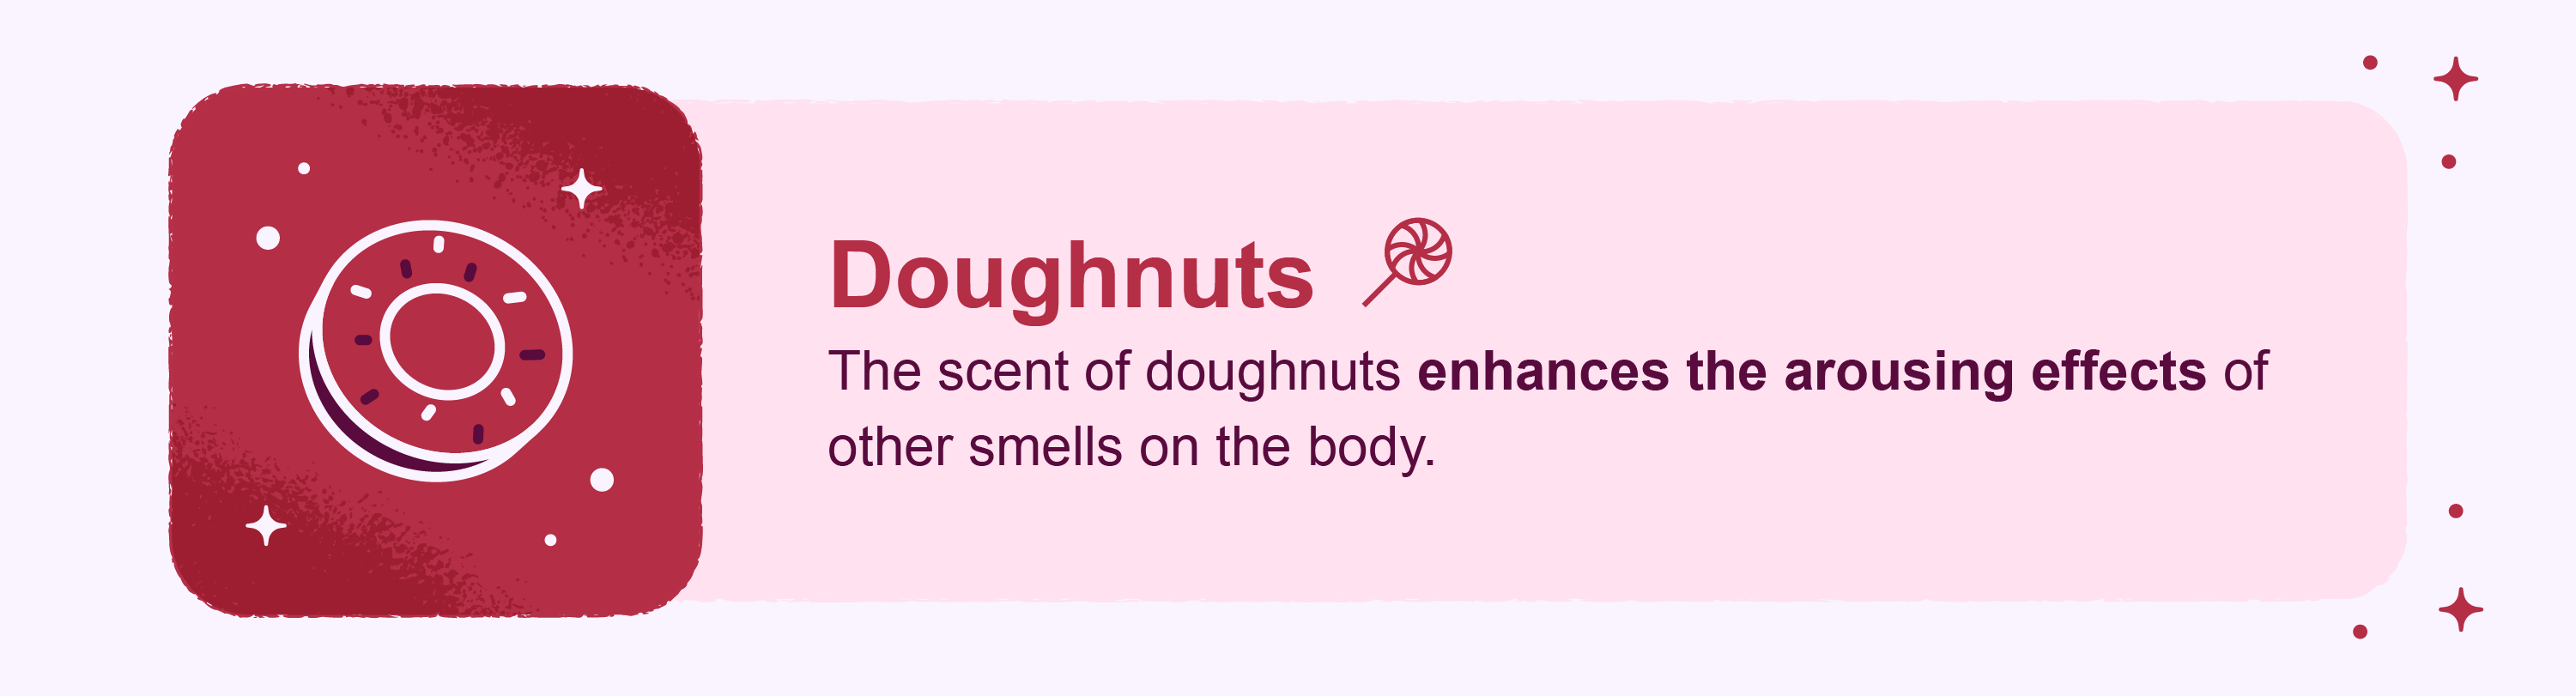 doughnut scent fact